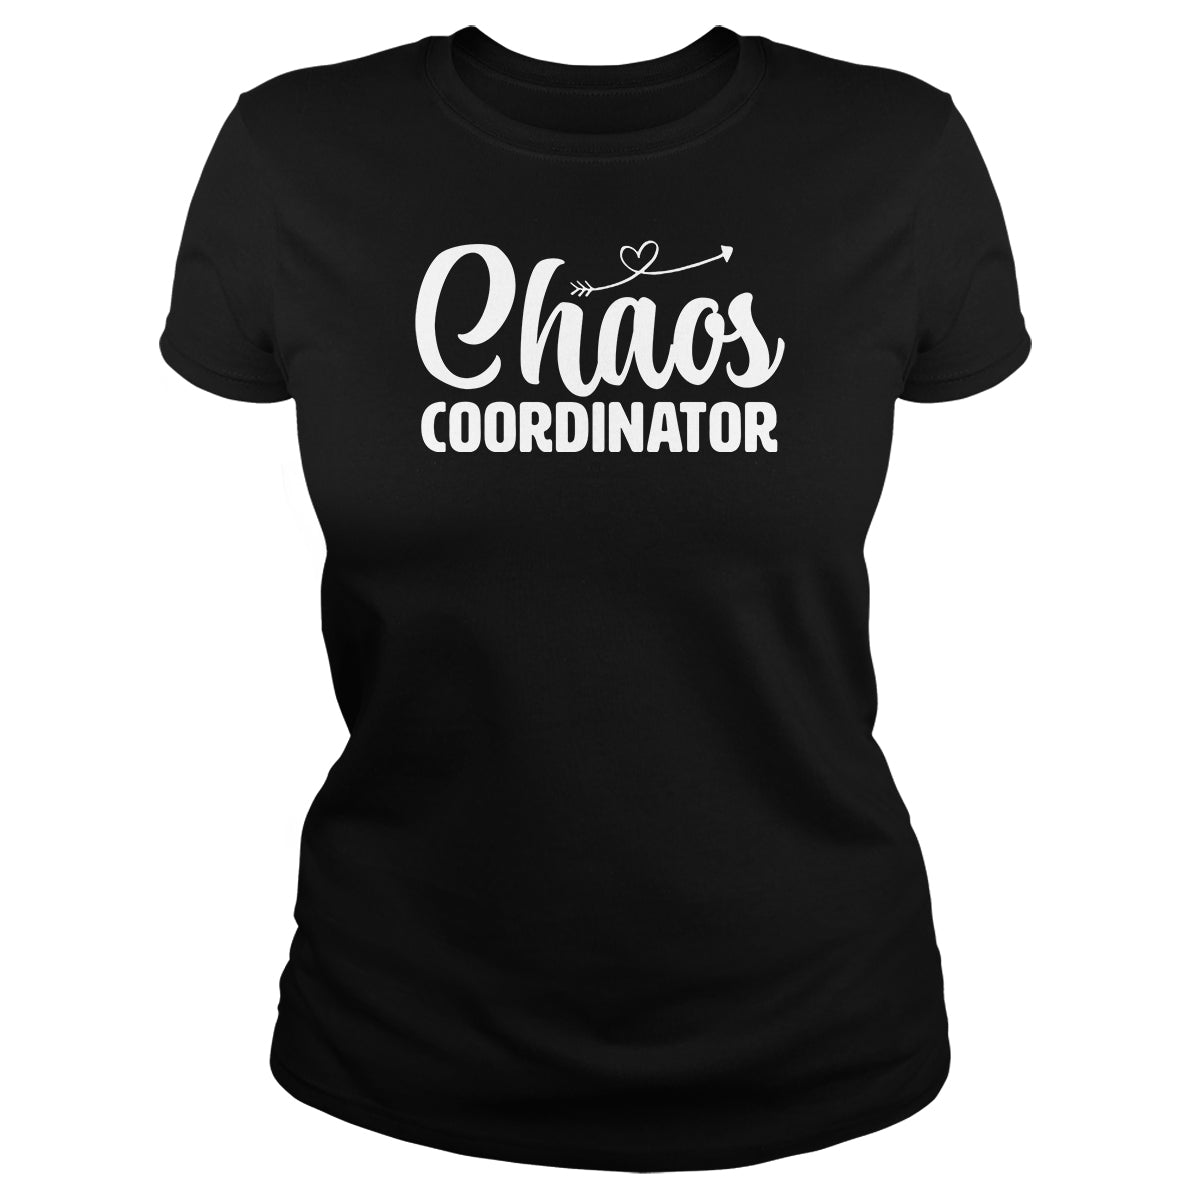 Chaos Coordinator - BustedTees.com